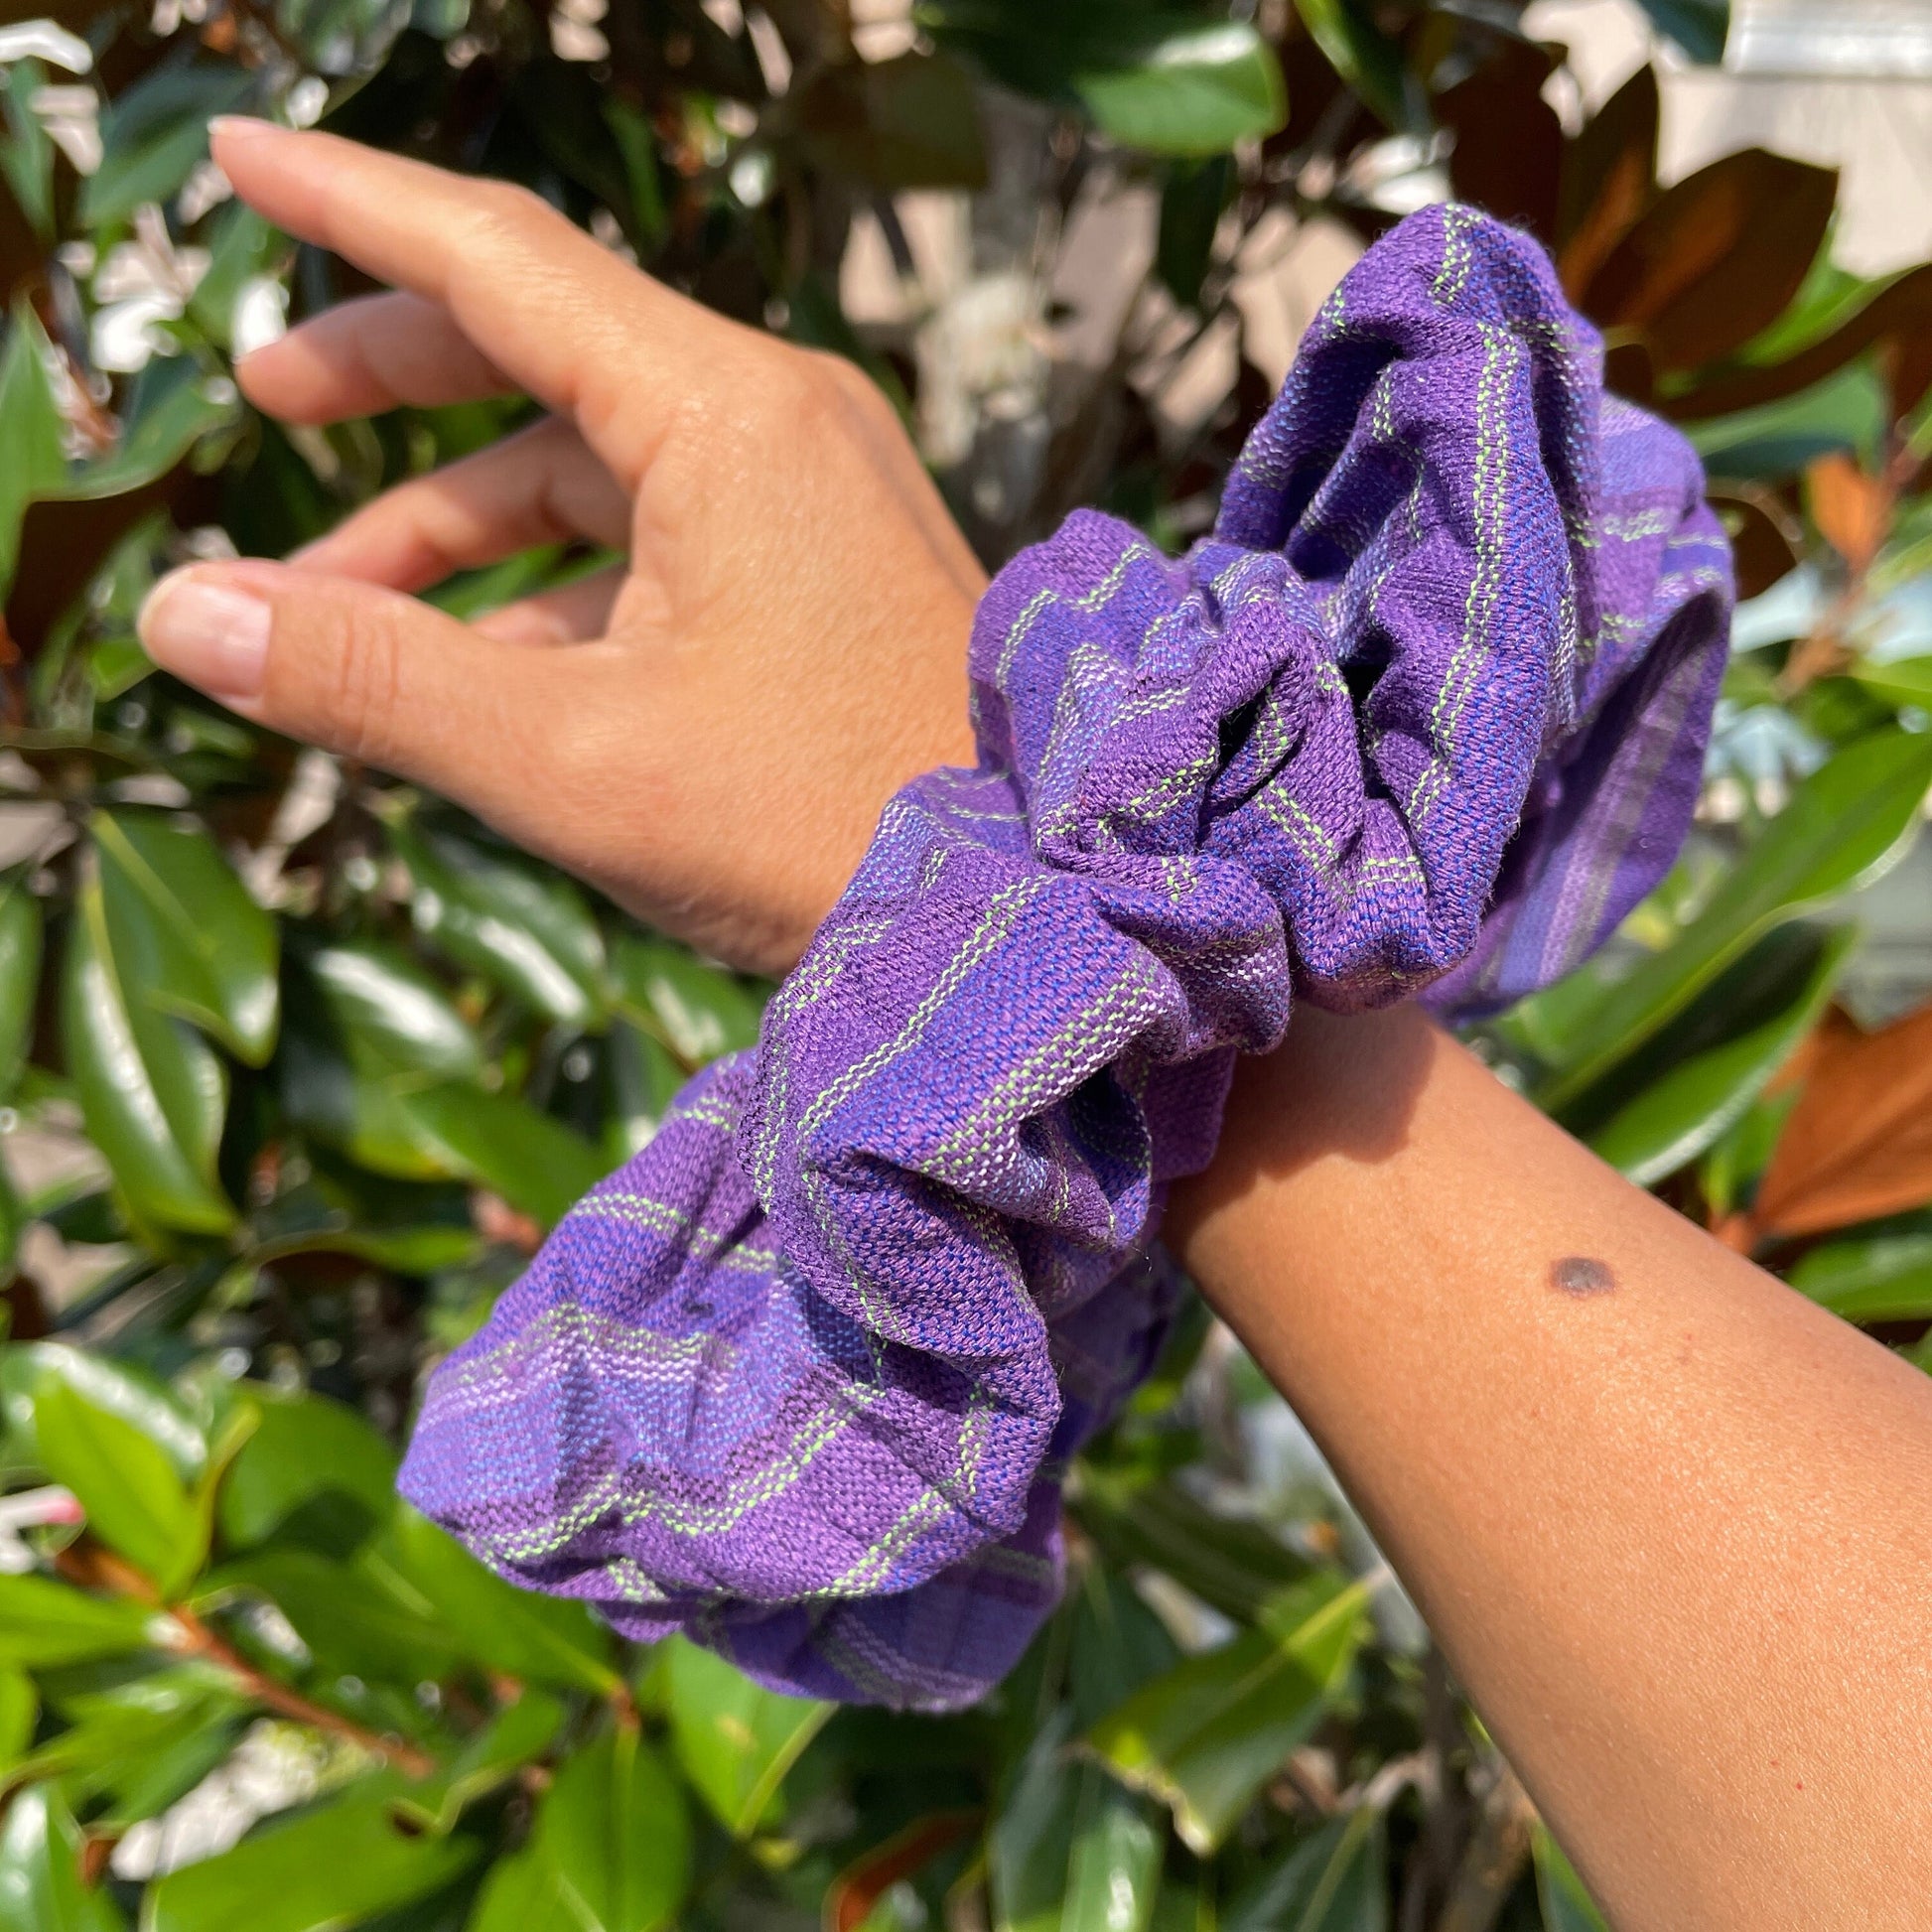 XXL Scrunchie Hair Tie, Oversized Aesthetic Hair Accessory, Stocking Bohemian Gift, Purple